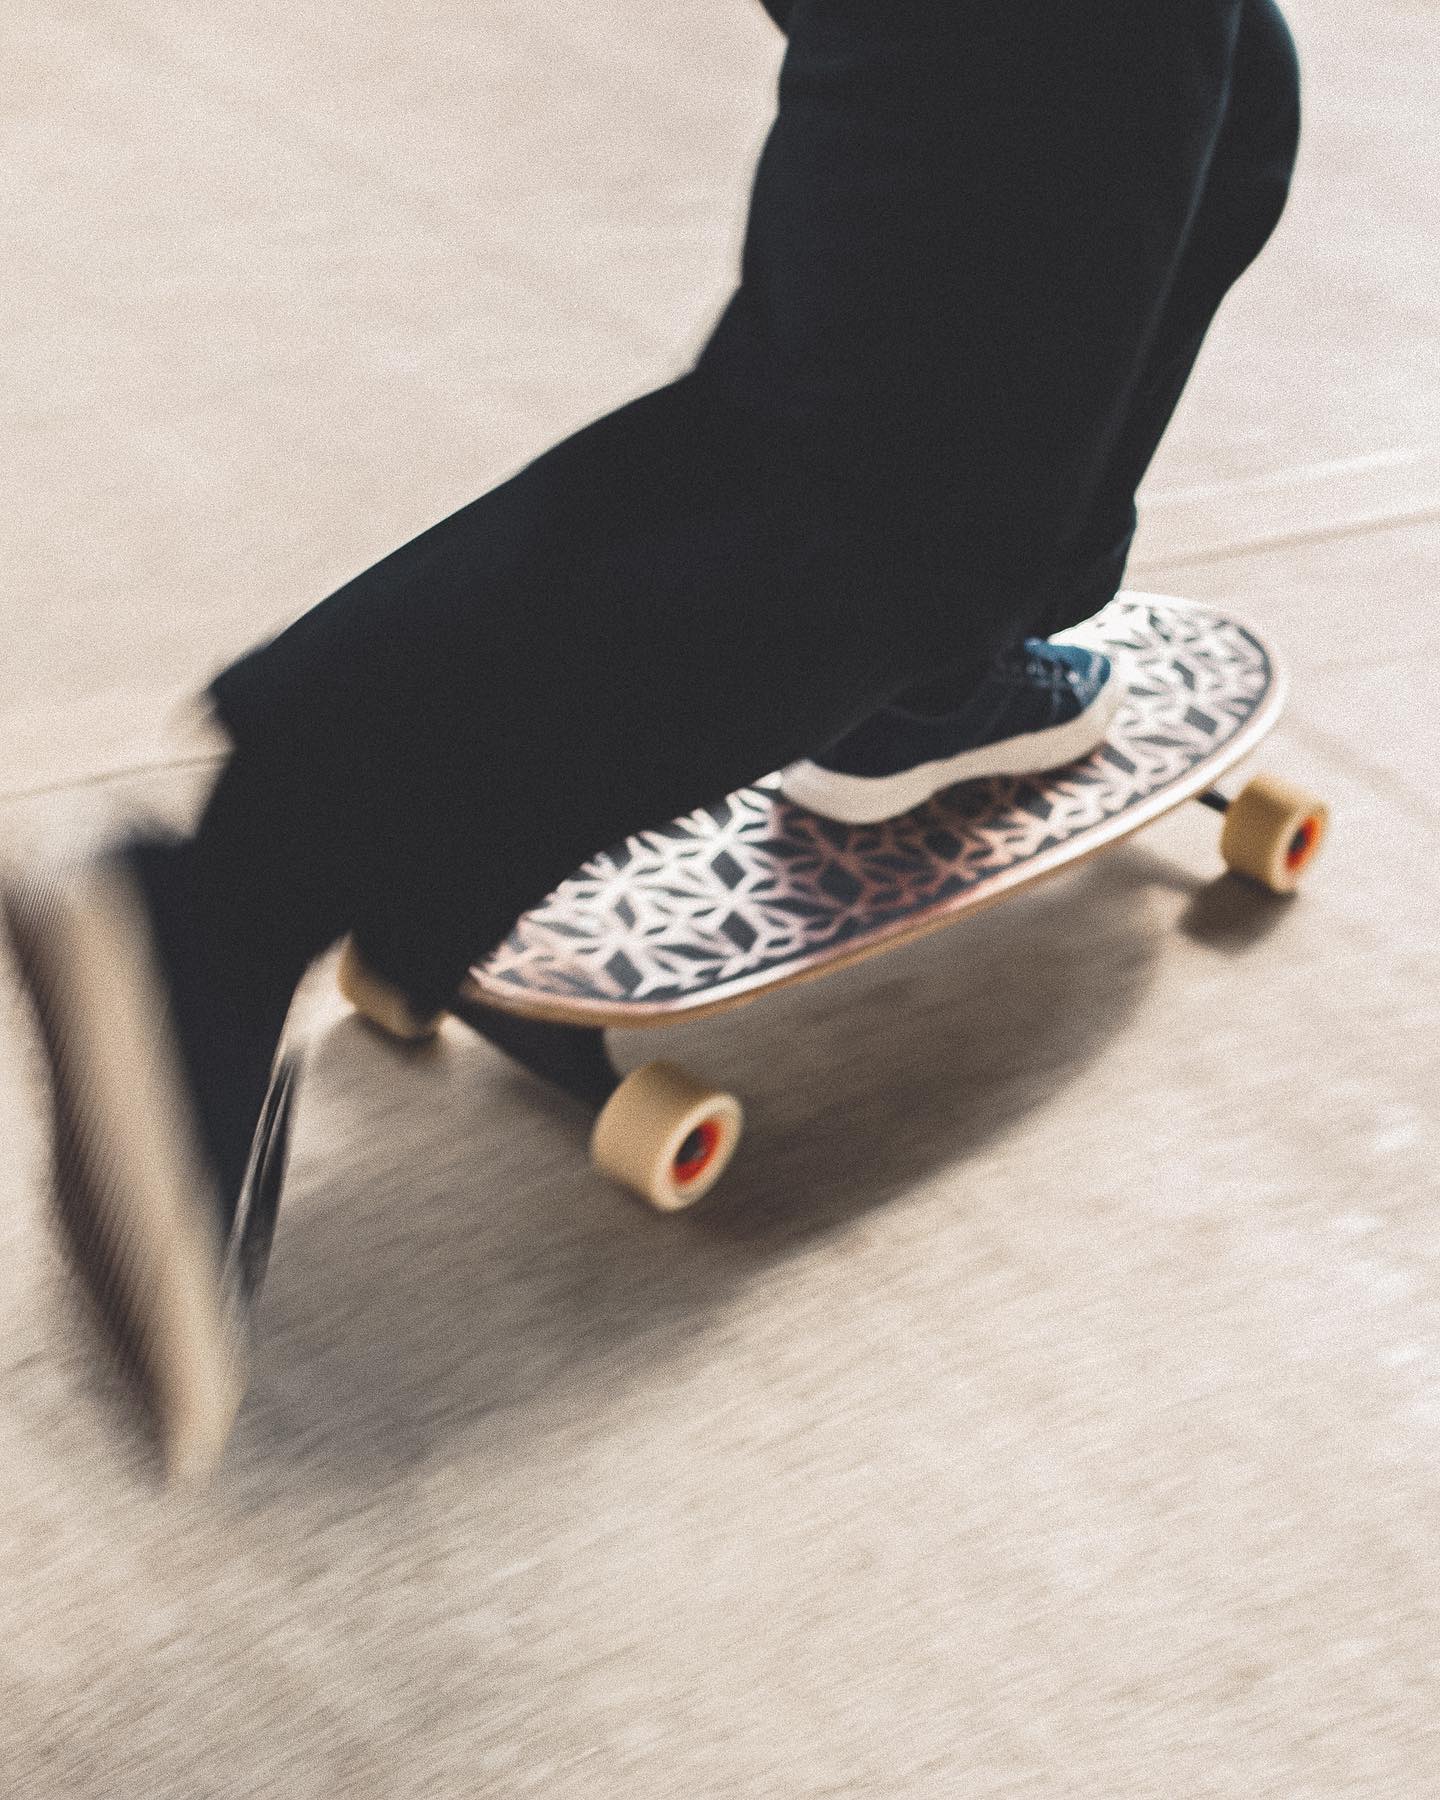 social post by globebrand_skateboards